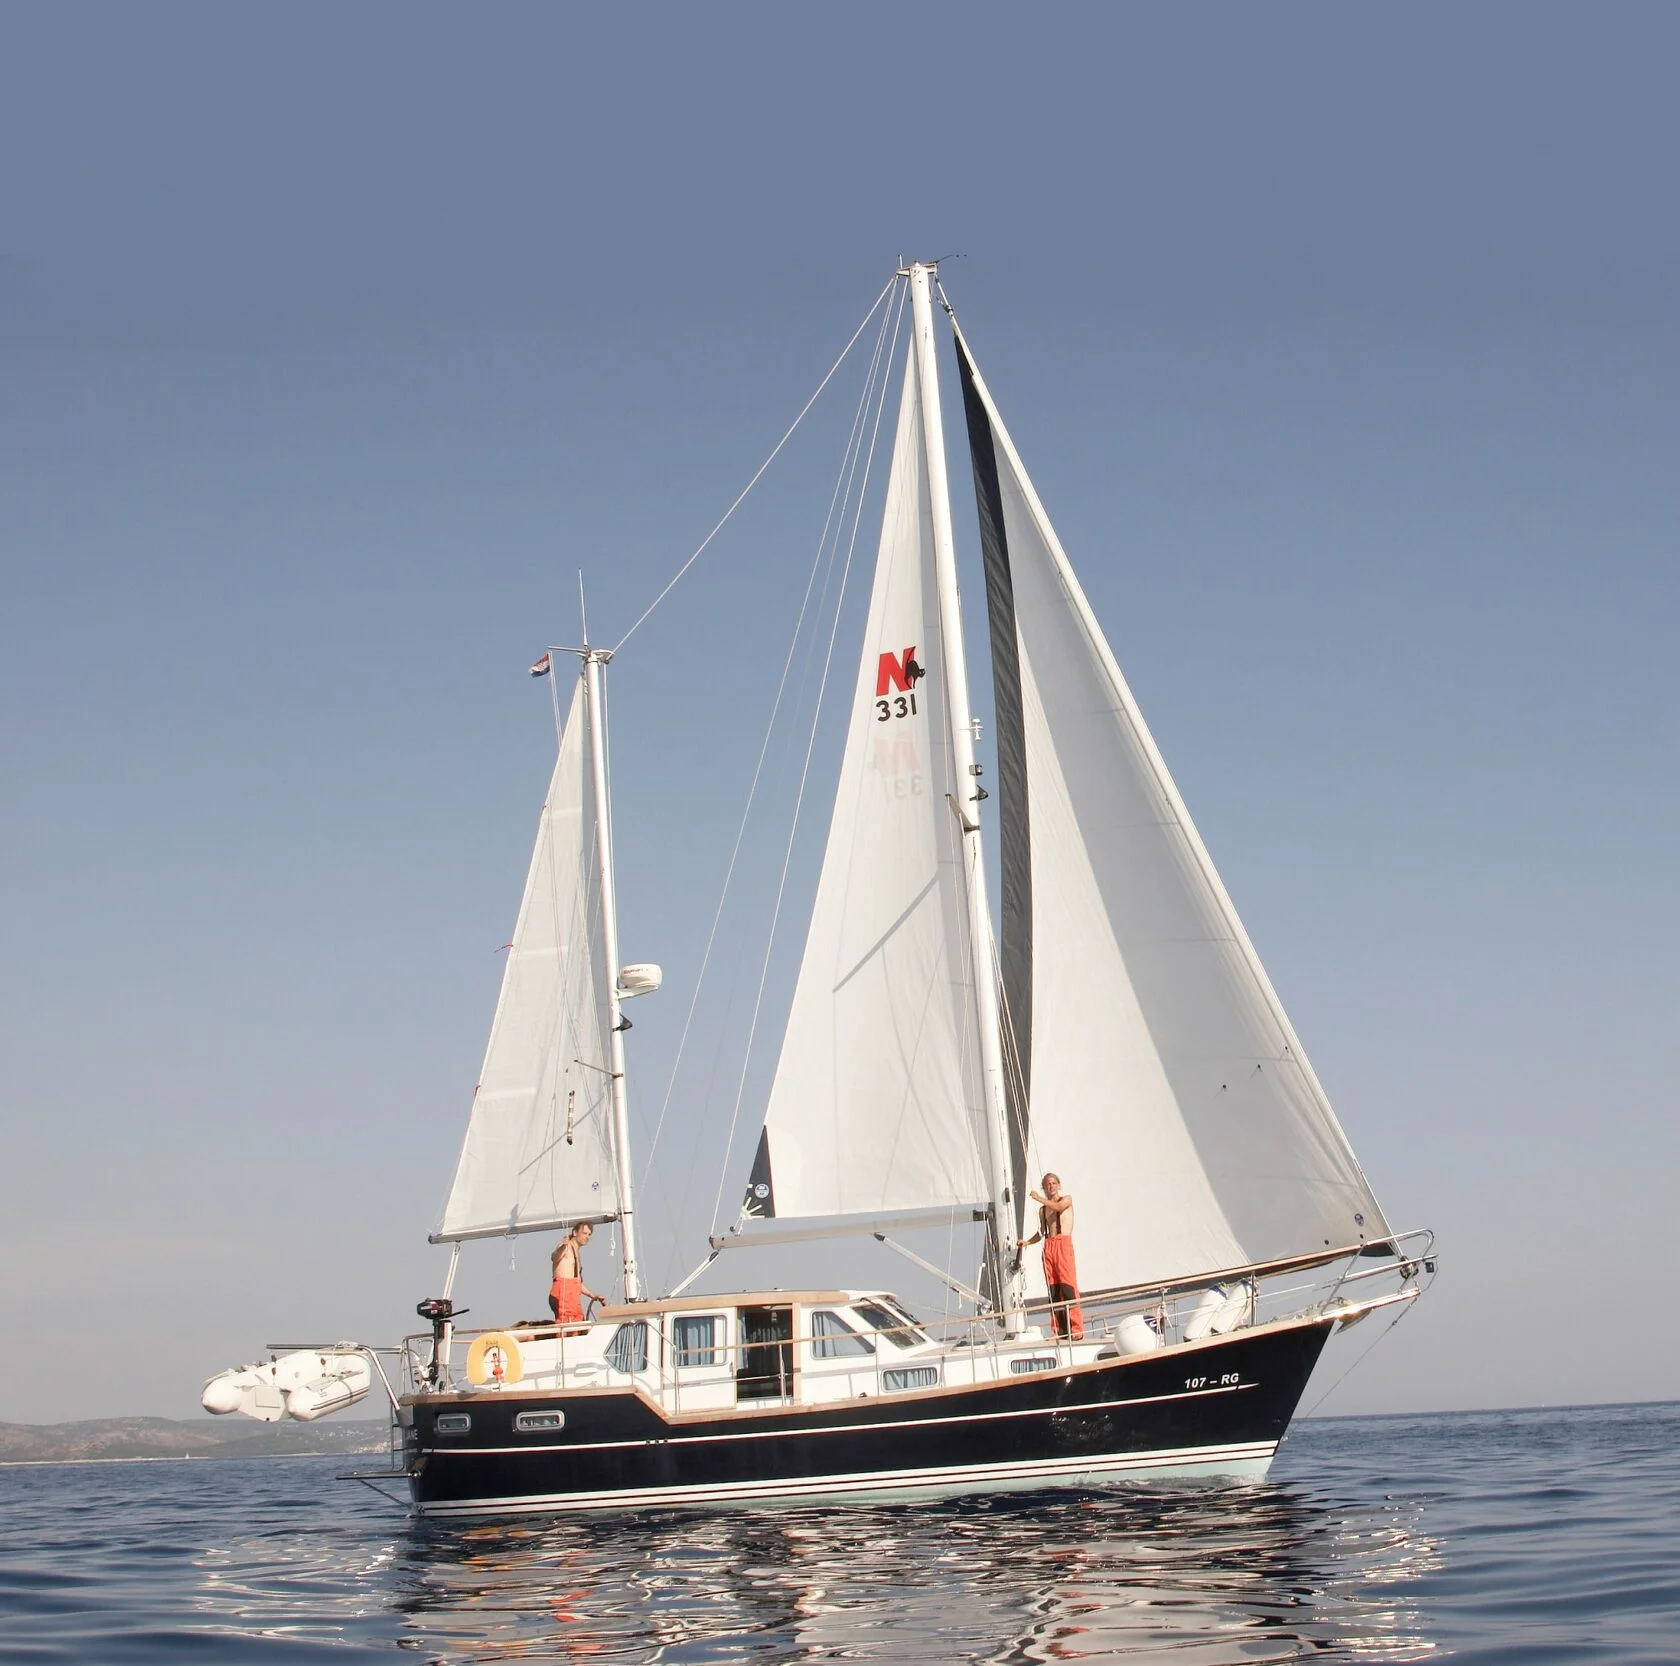 Nauticat 331 motorsailer with sails up on the coastal ocean